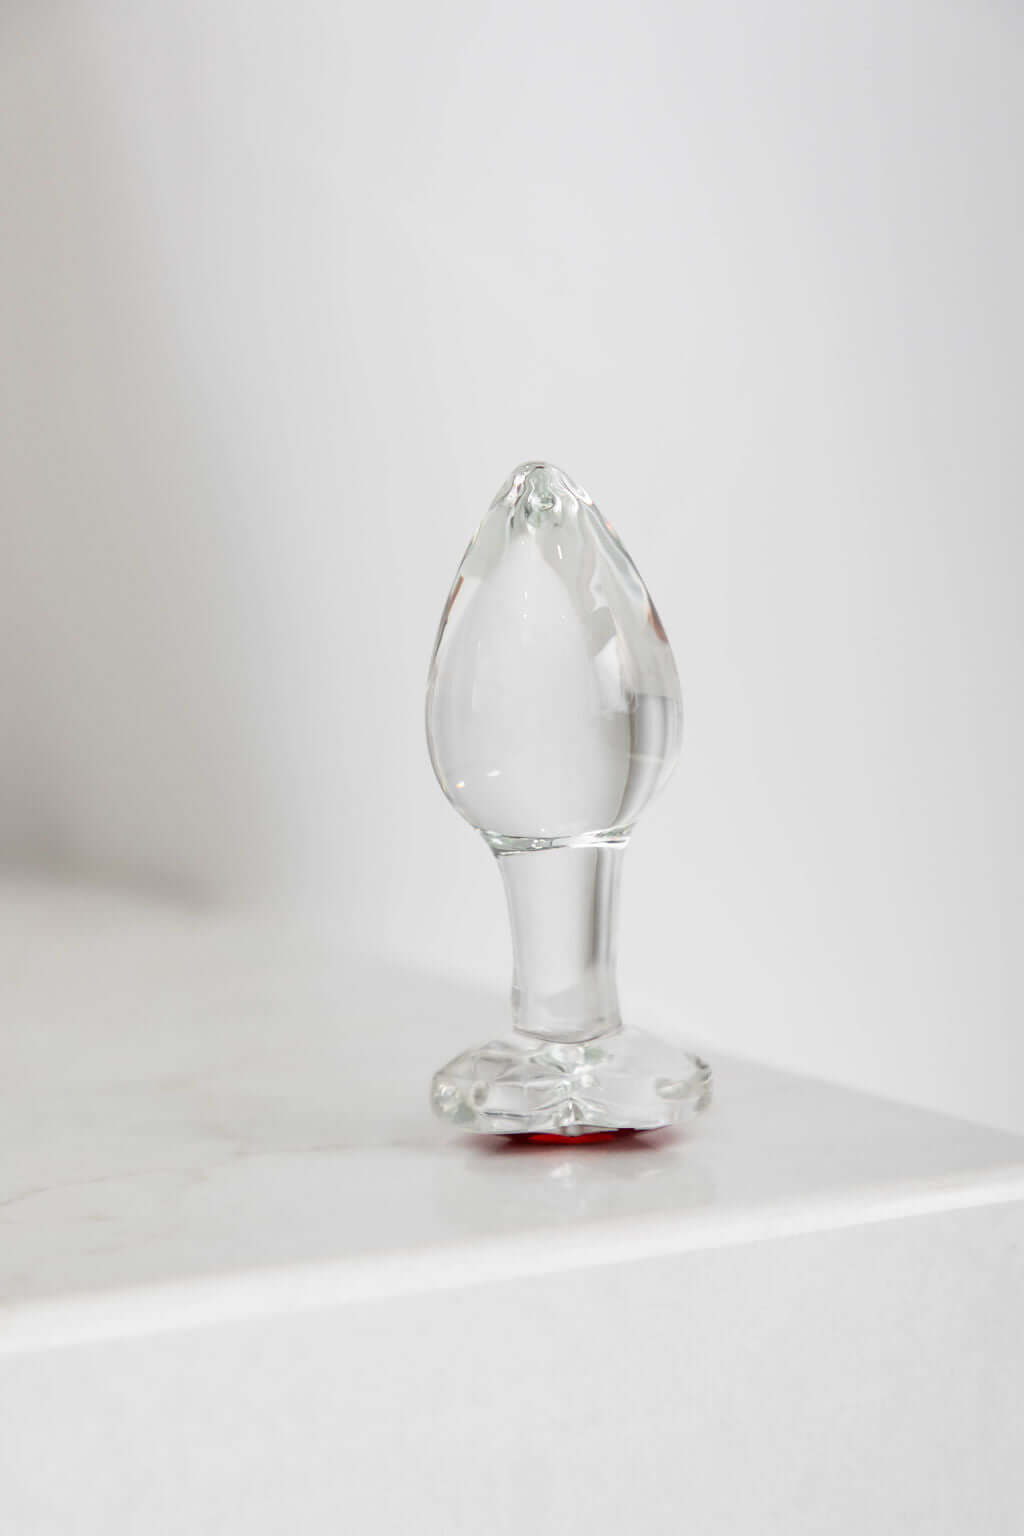 Adam & Eve RED HEART GEM GLASS PLUG - $42.00 - Sex Toy - Naked Curve